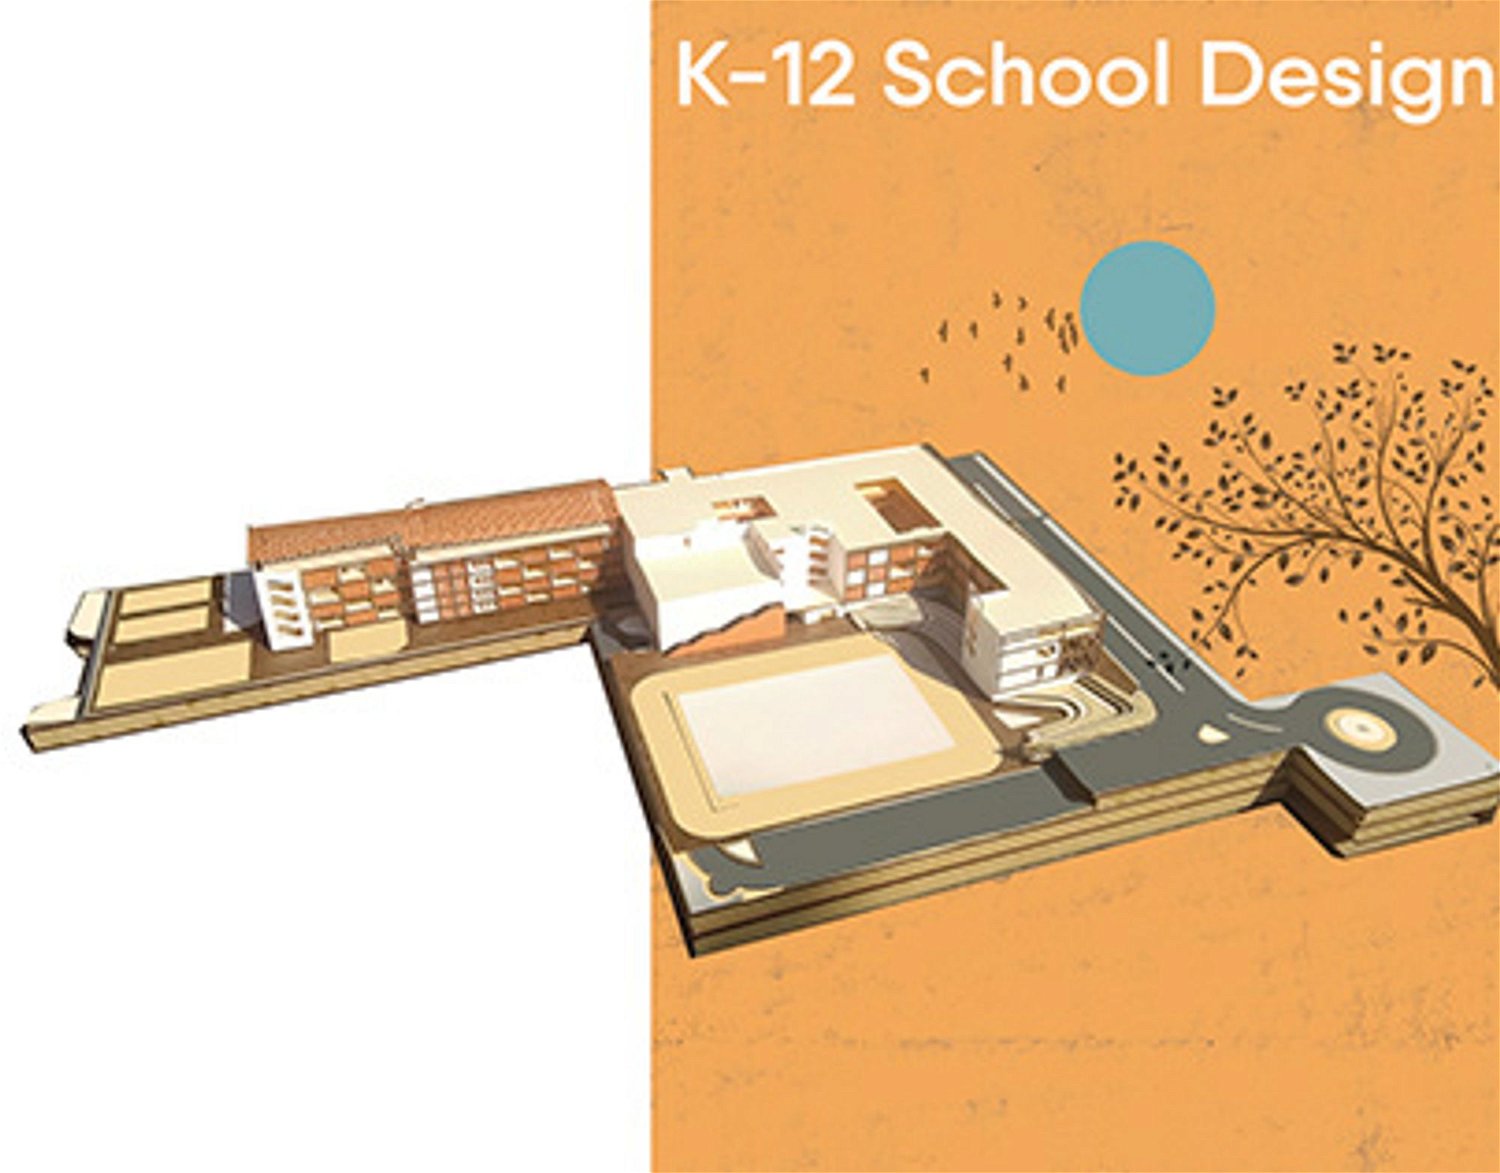 K-12 School Design Project